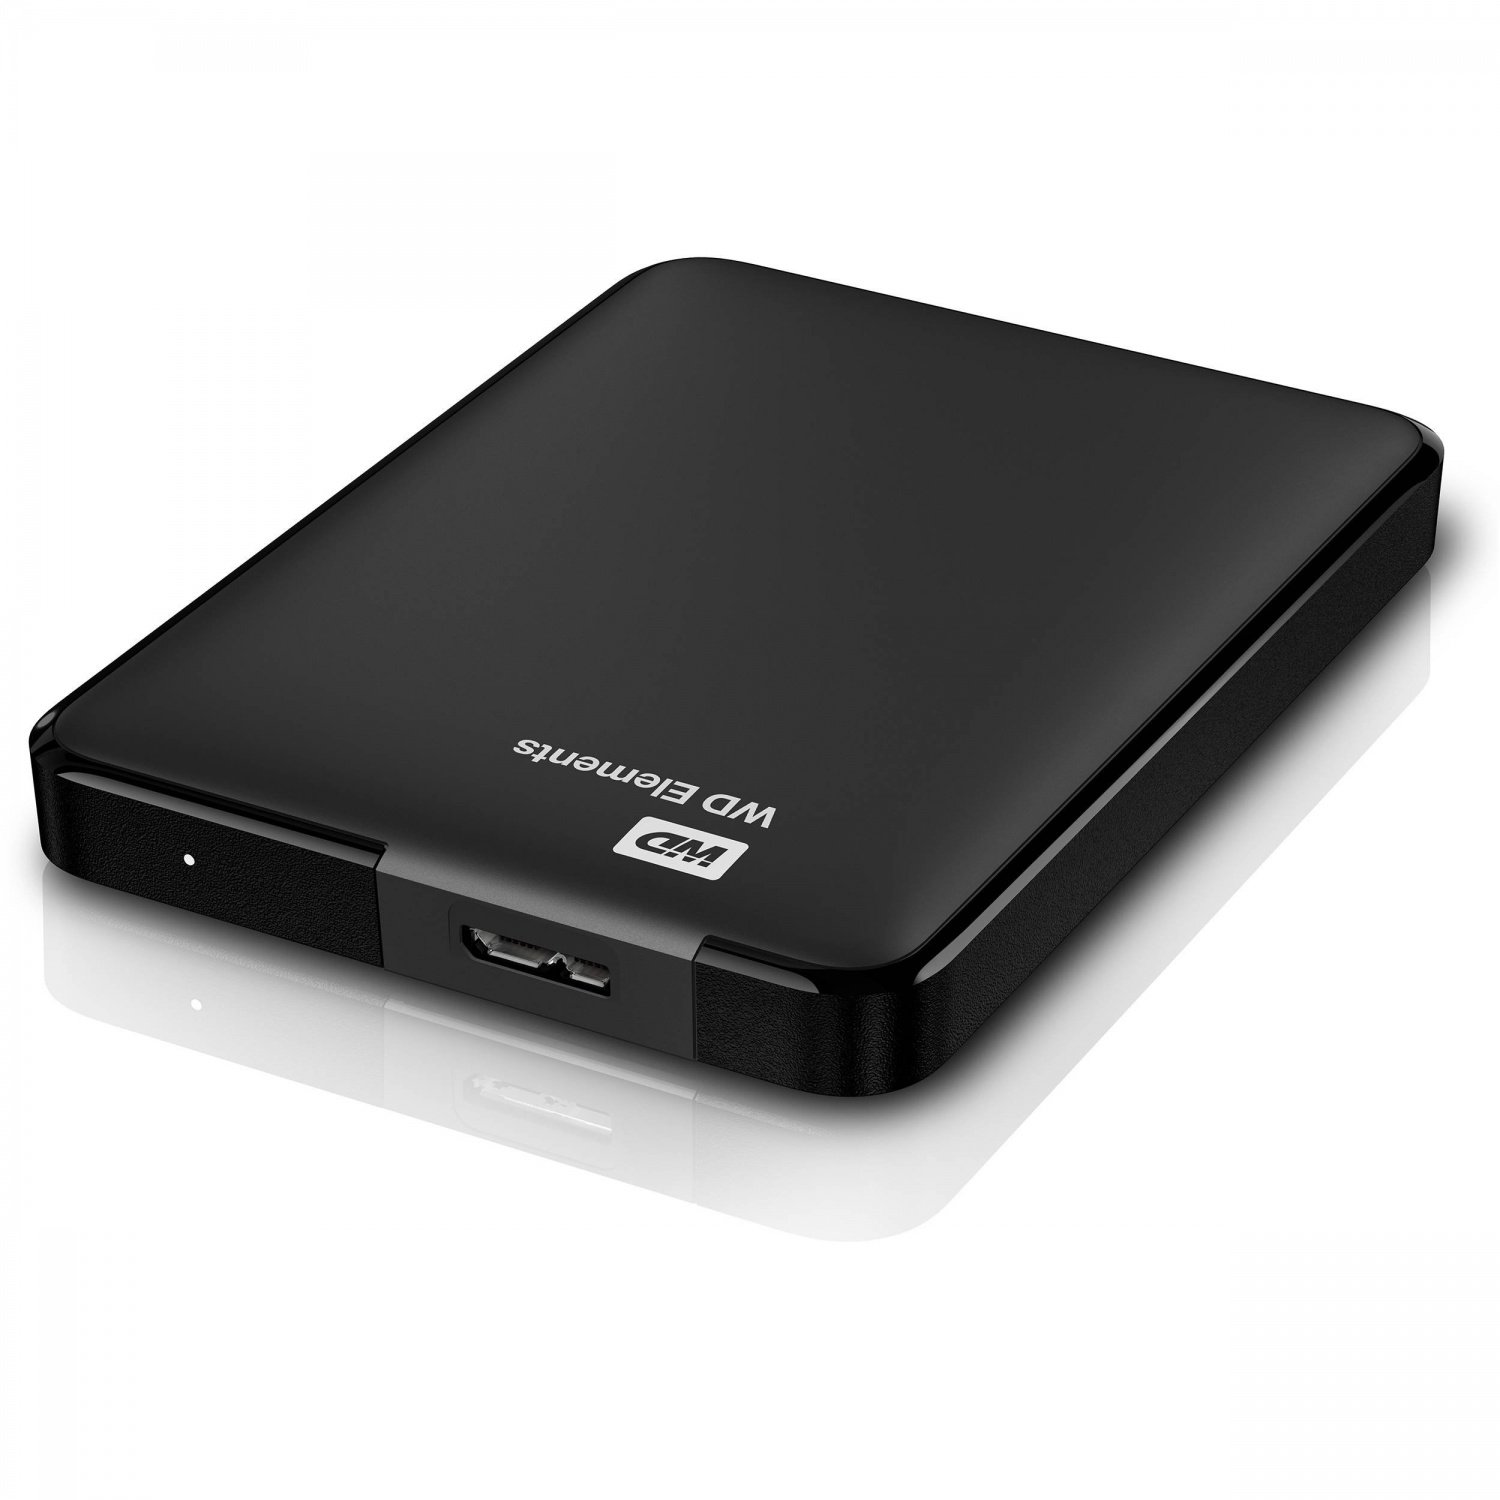  Жорсткий диск WD Elements 500GB 2.5 USB 3.0 External Black (WDBUZG5000ABK-WESN) фото